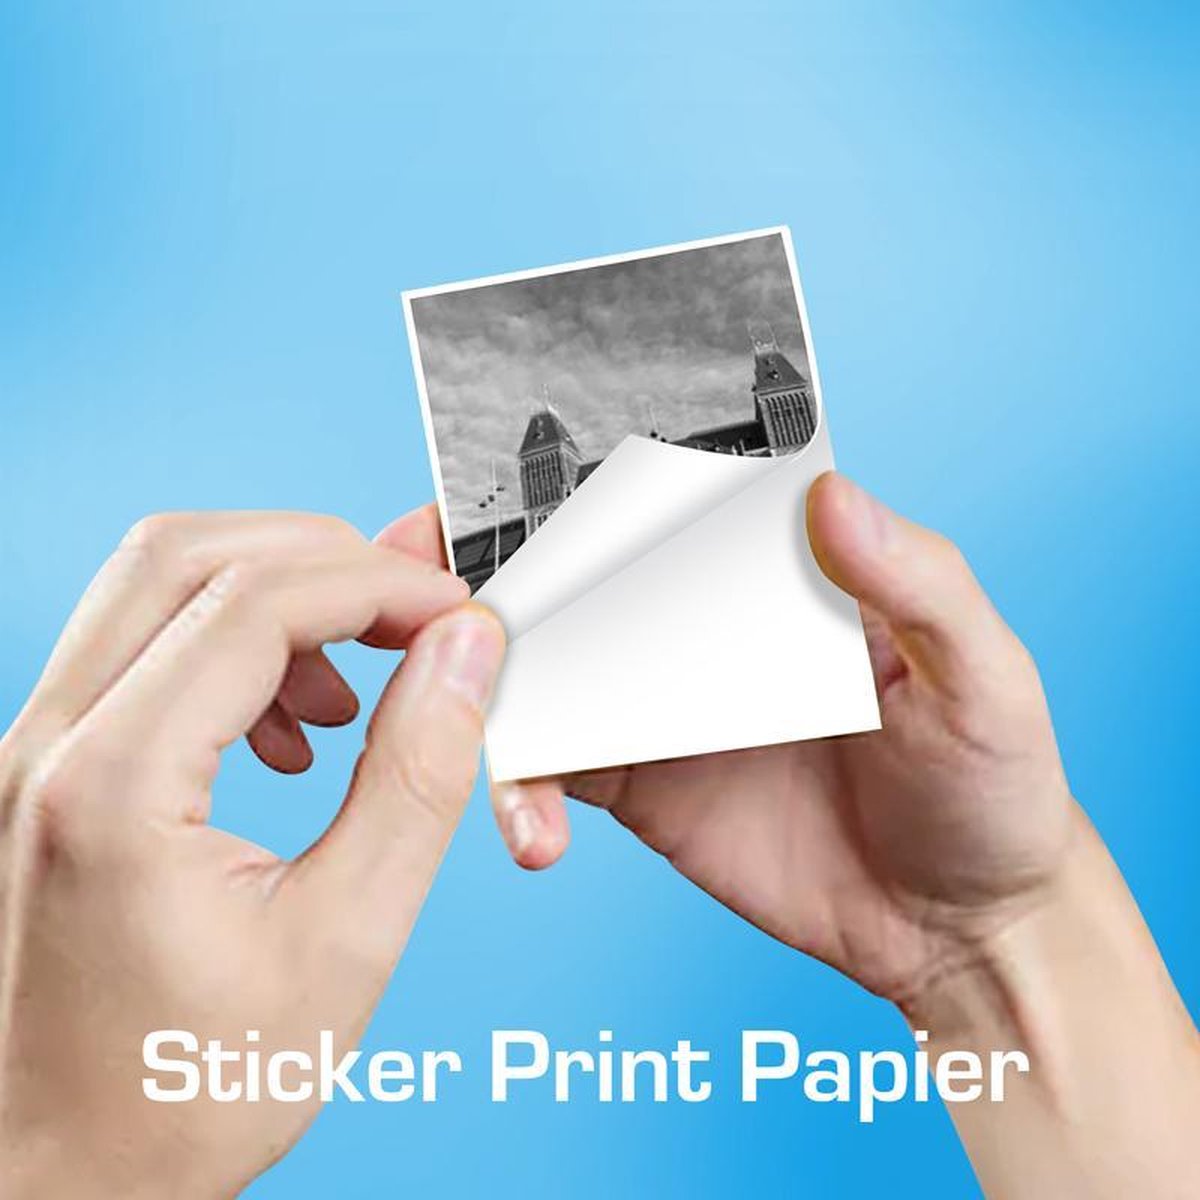 kleuring alarm matras InBlue sticker papier voor Pocket Printer - zelfklevend wit papier | bol.com